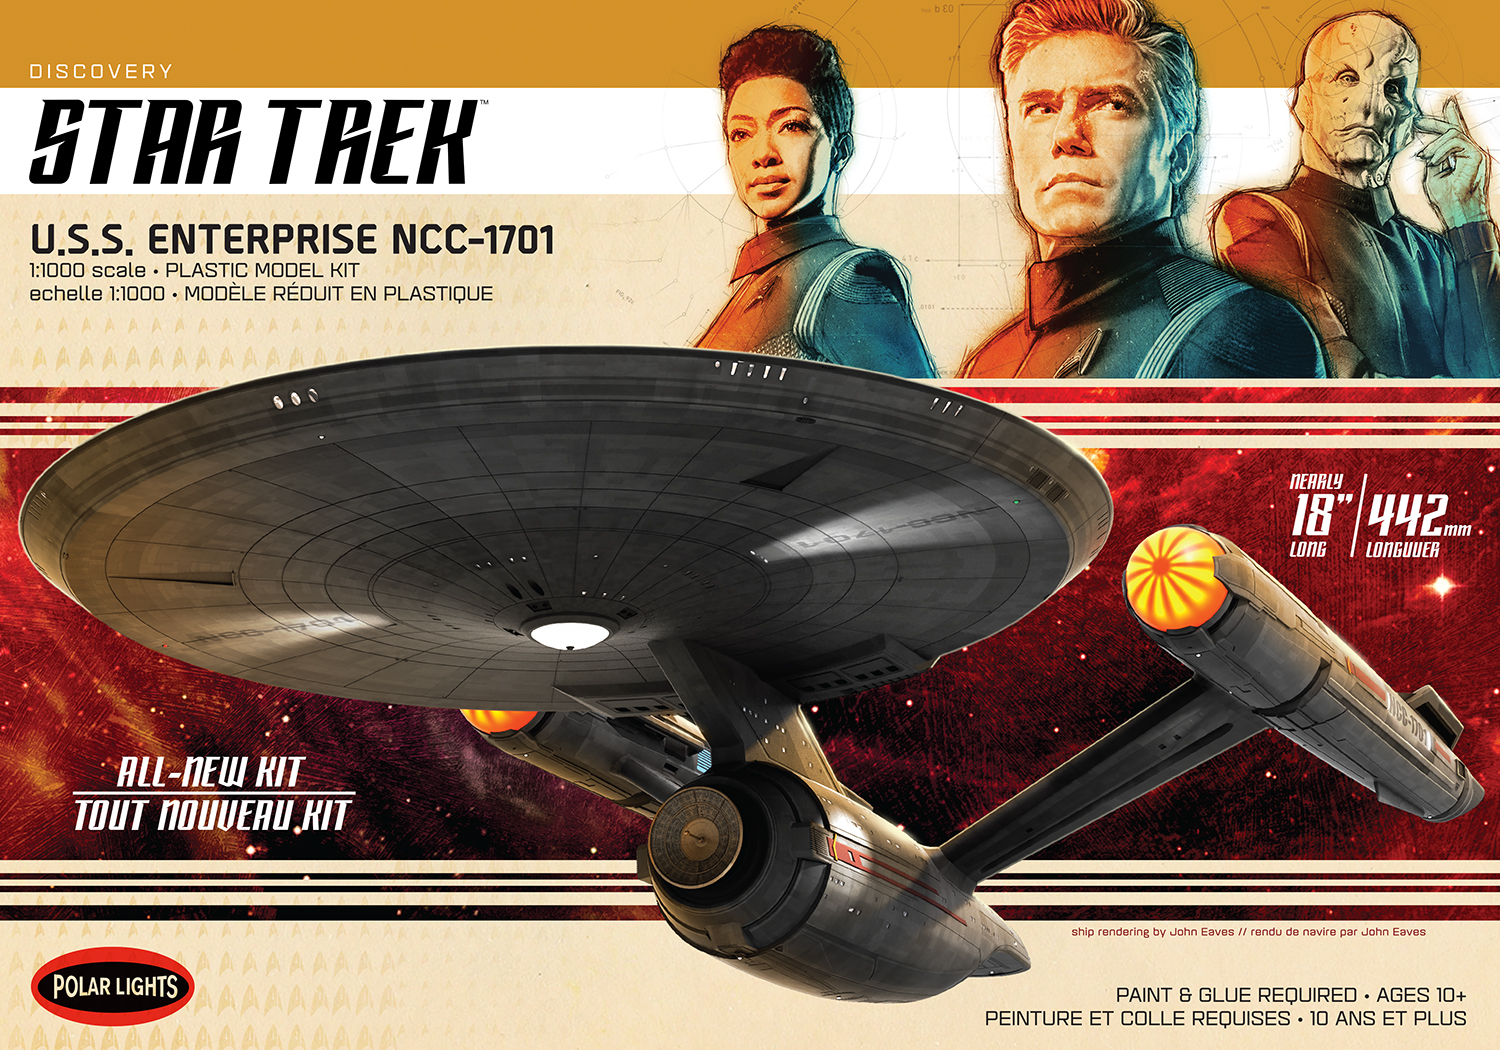 StarTrek USS Enterprise NCC-1701